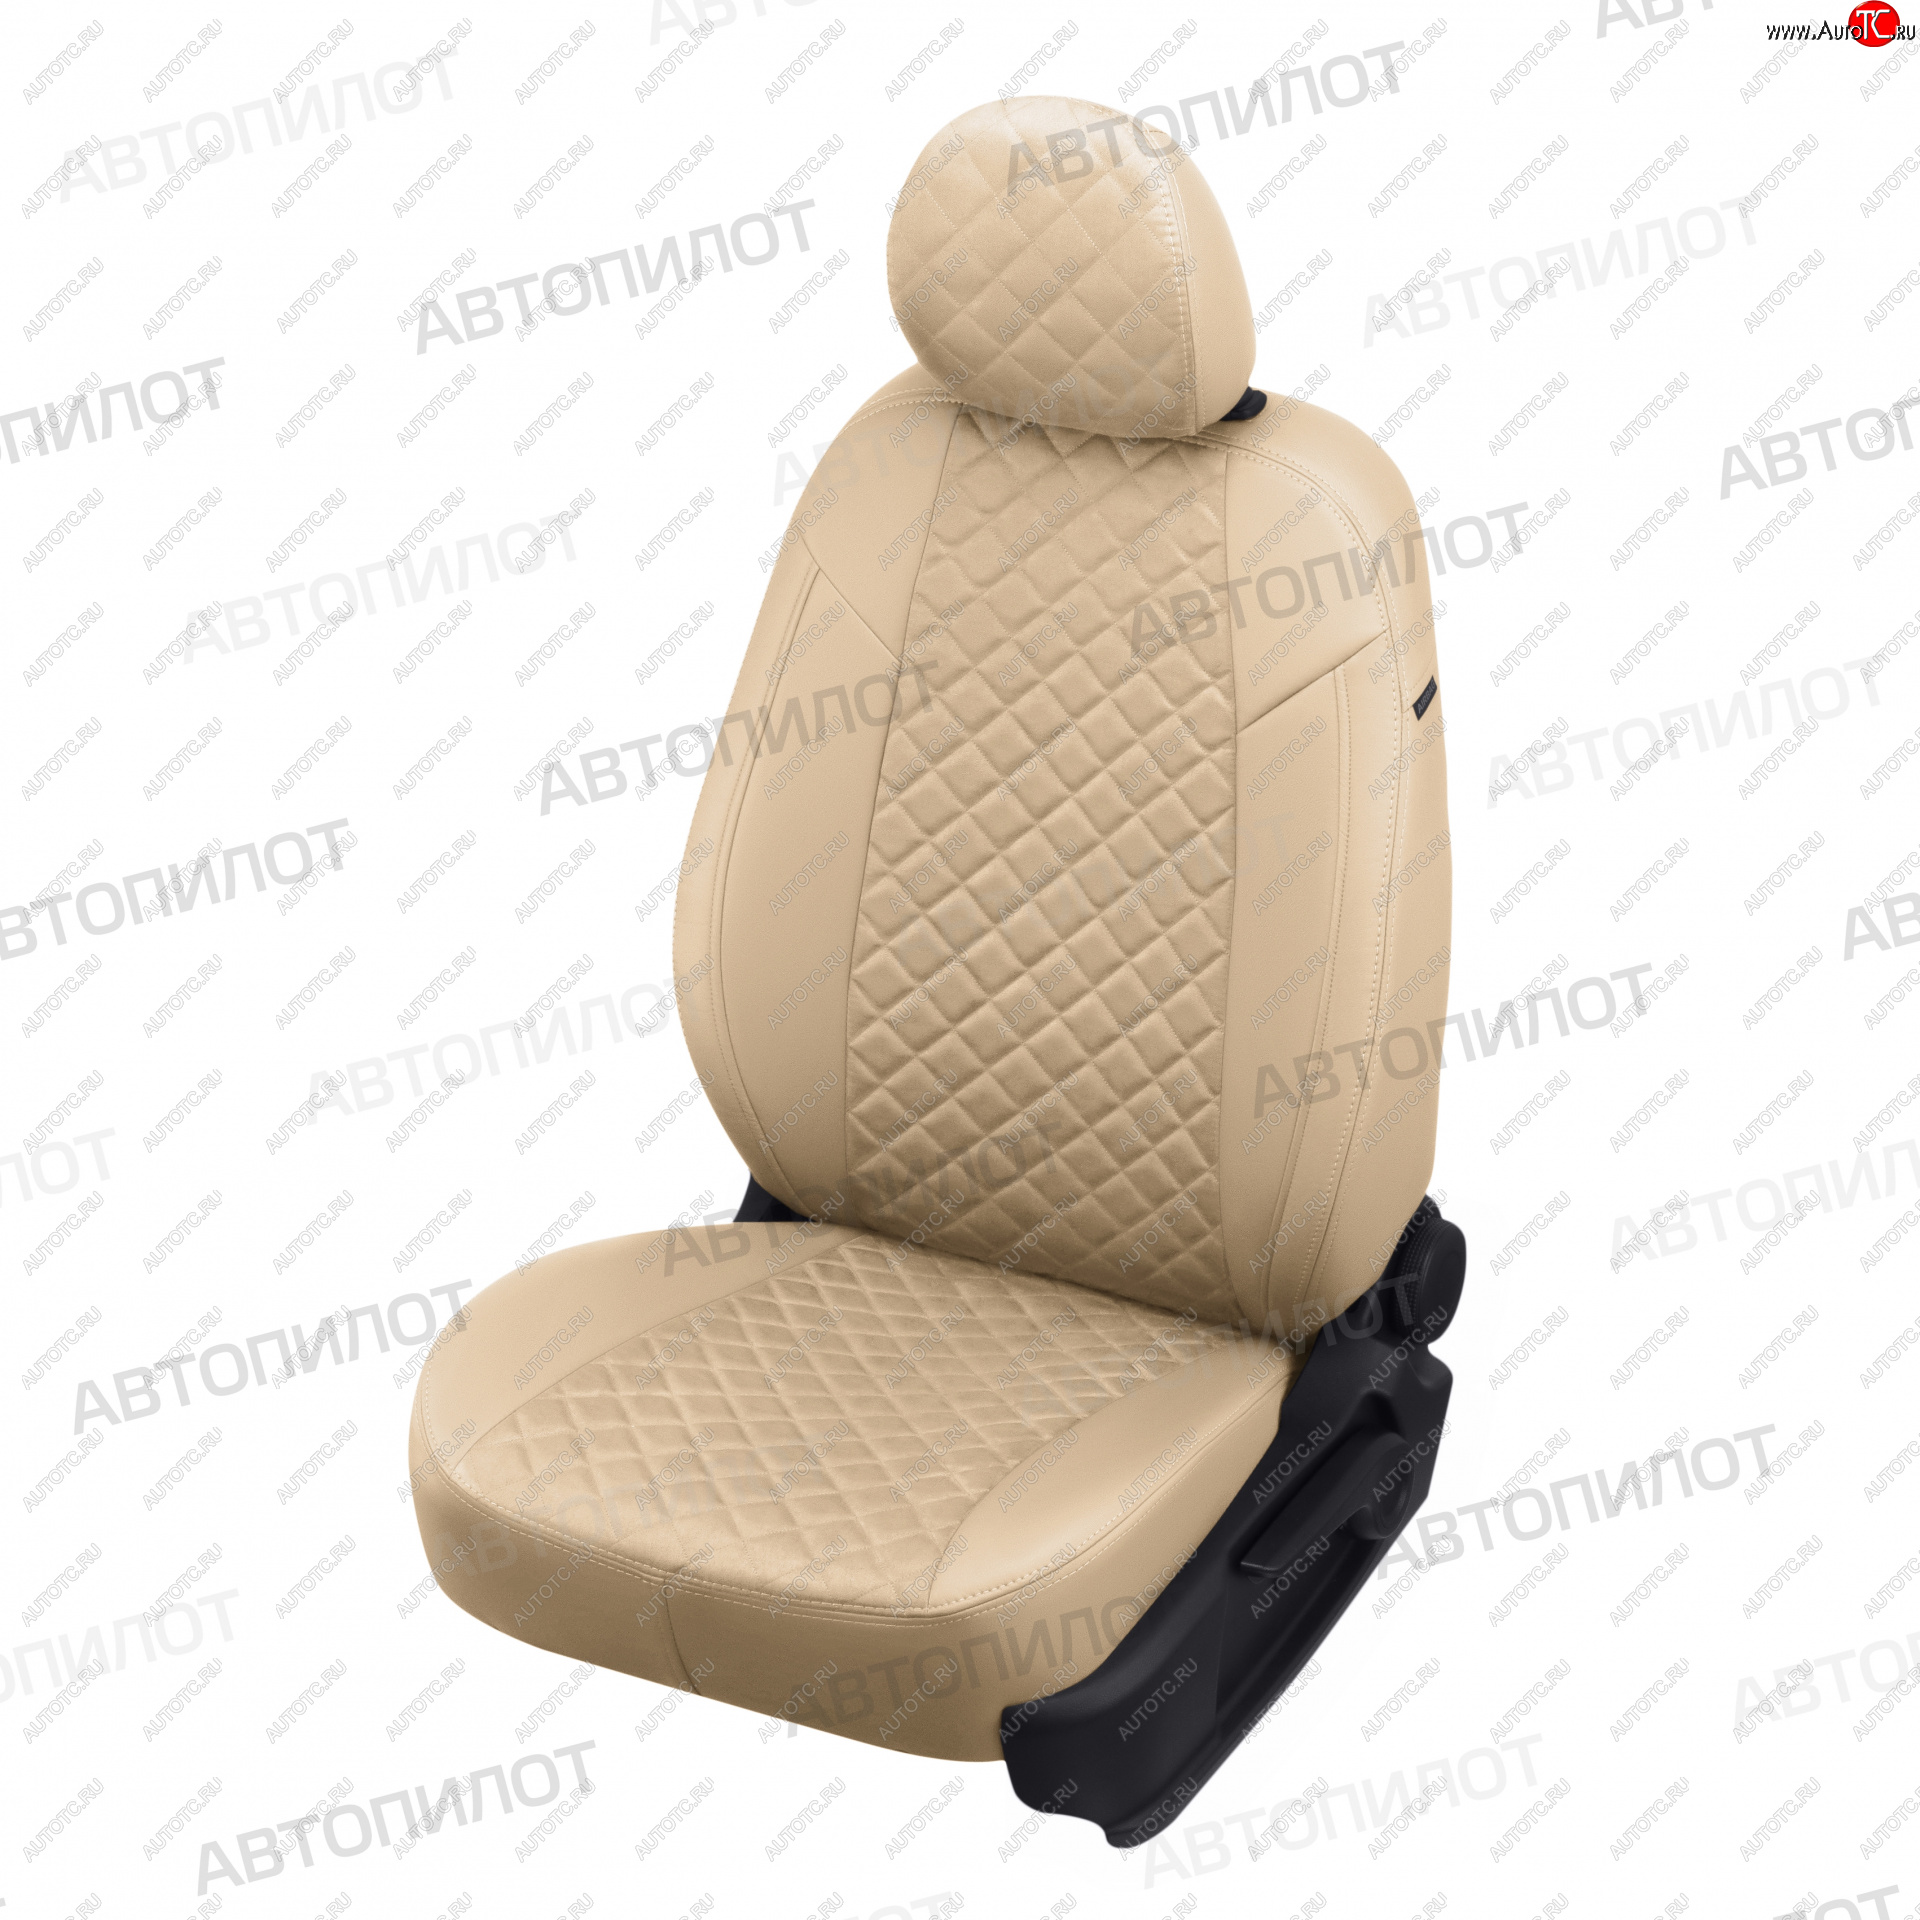 14 499 р. Чехлы сидений (экокожа/алькантара, 60/40) Автопилот Ромб Hyundai Santa Fe 2 CM дорестайлинг (2006-2009) (бежевый)